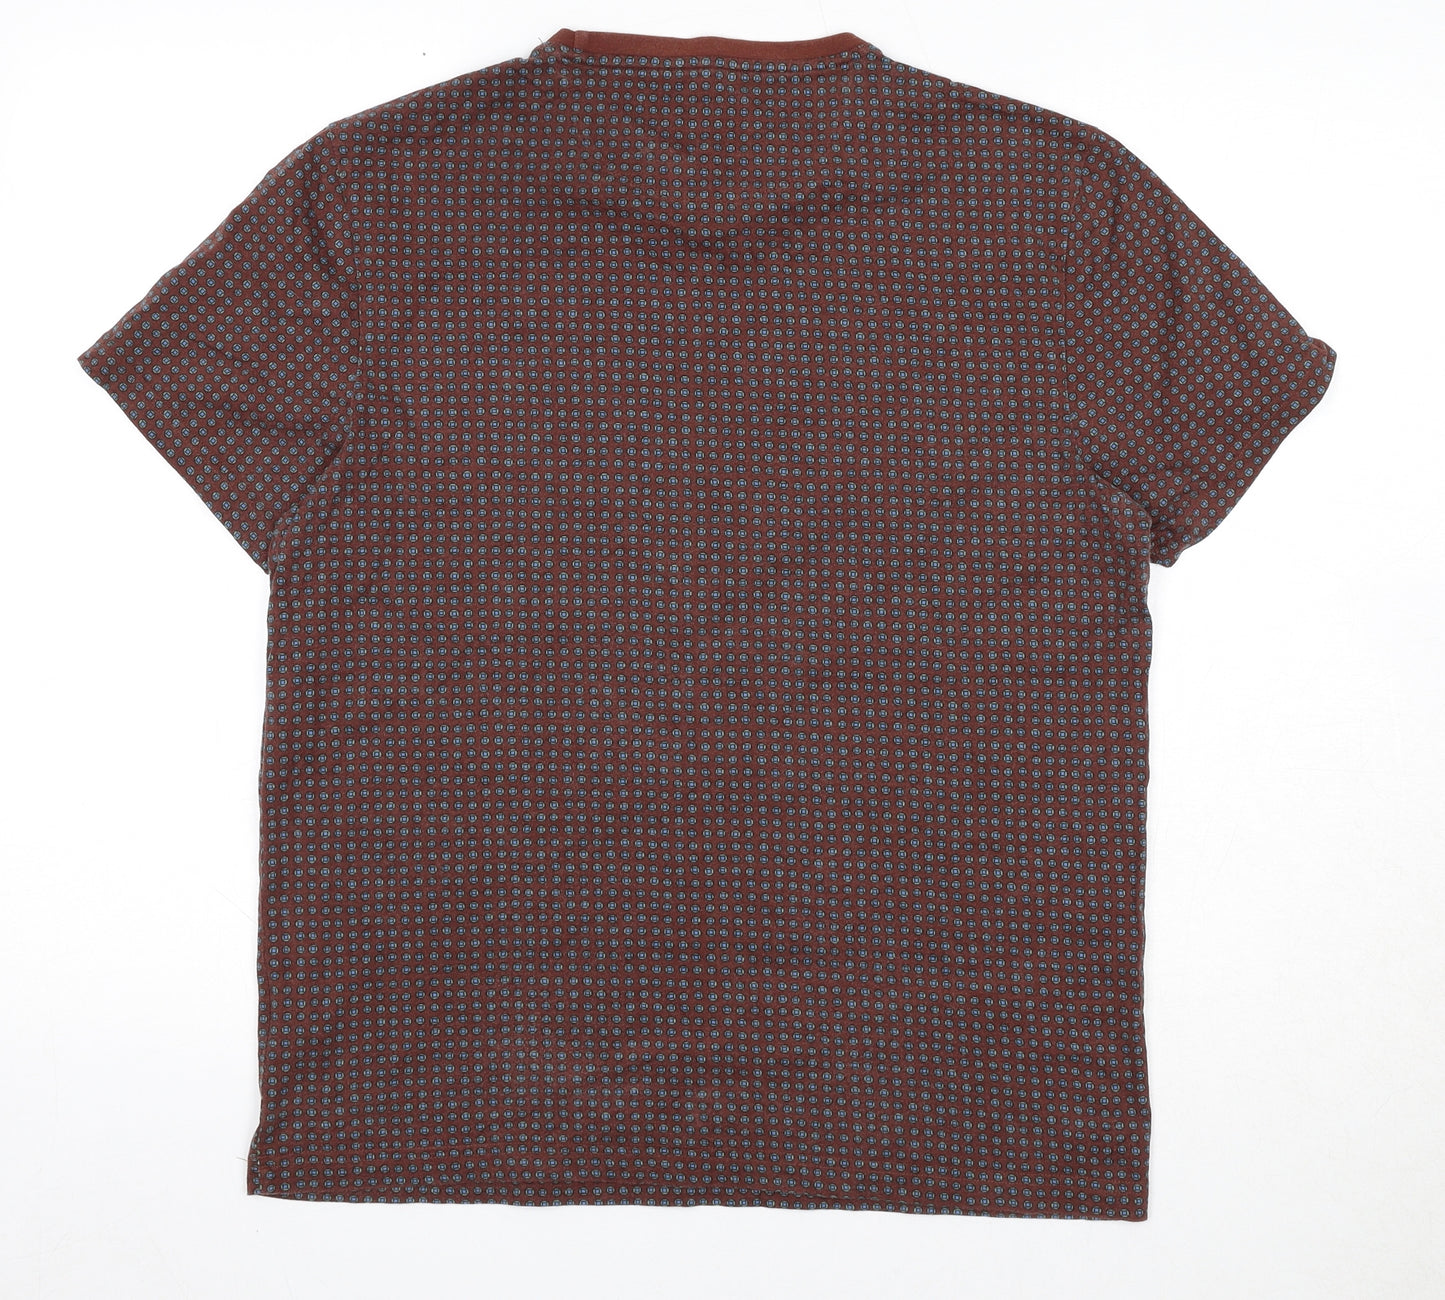 Farah Mens Brown Geometric Cotton T-Shirt Size L Round Neck